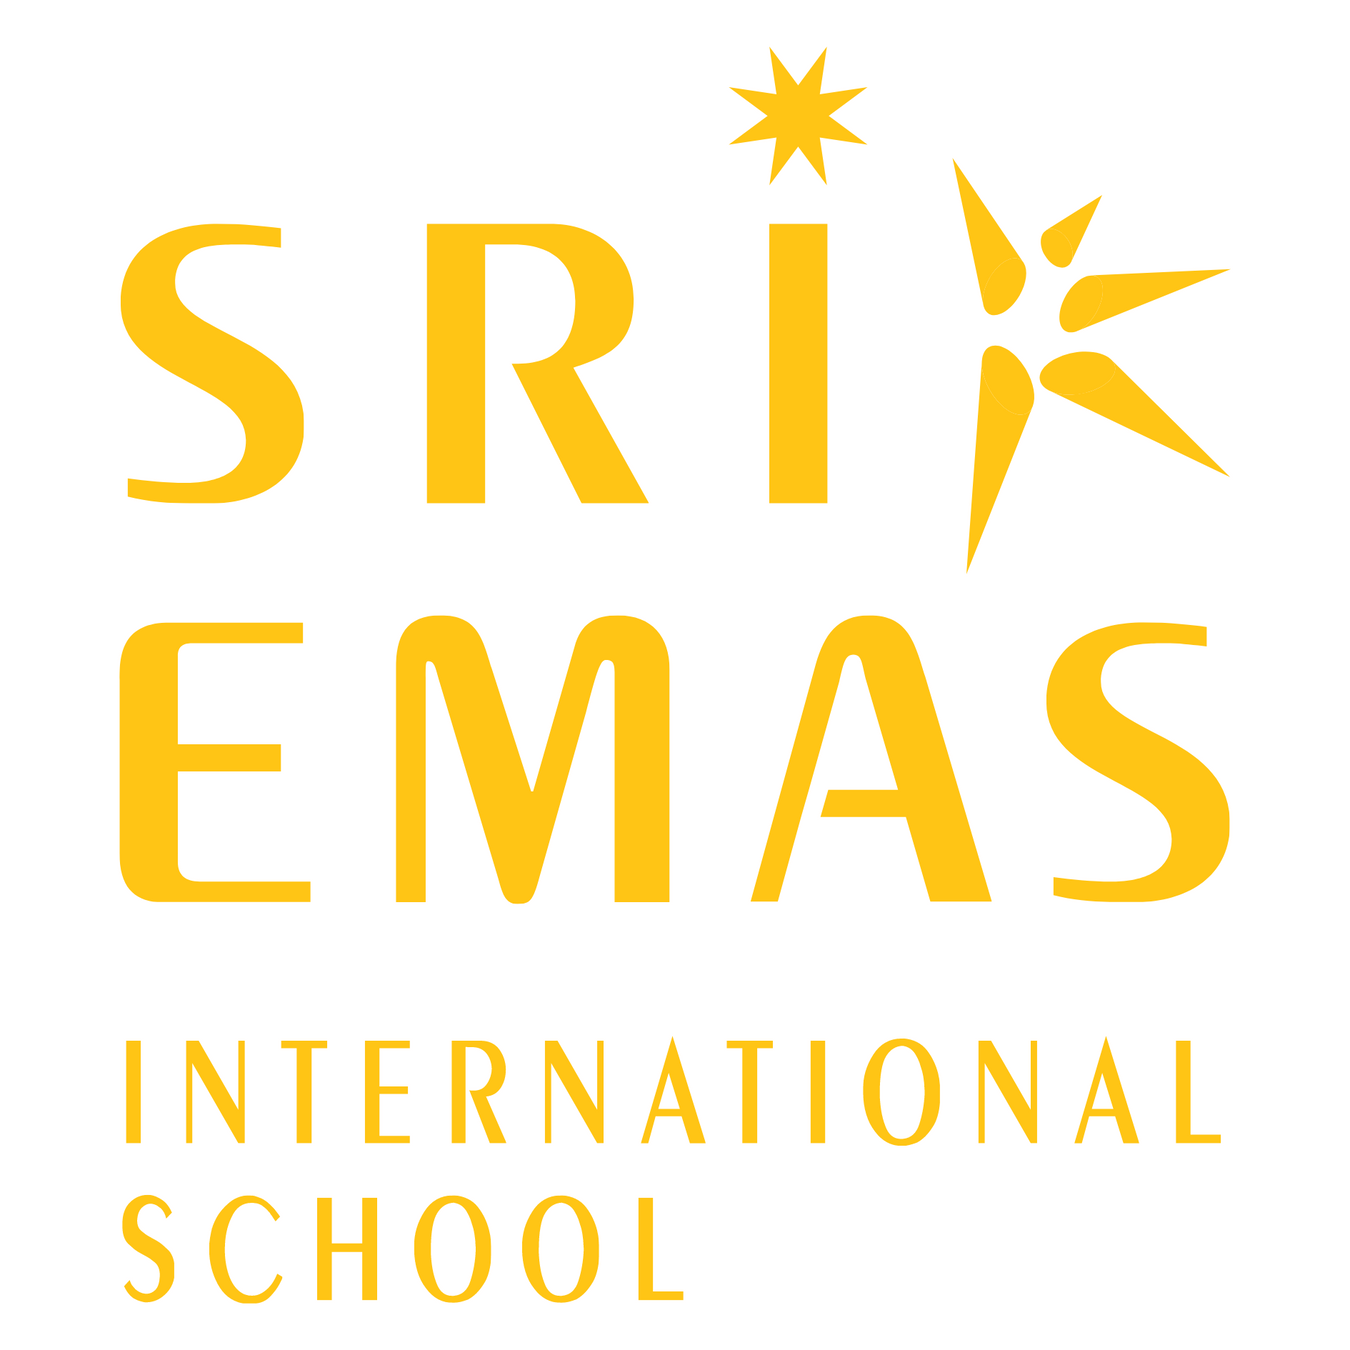 Sri Emas International School